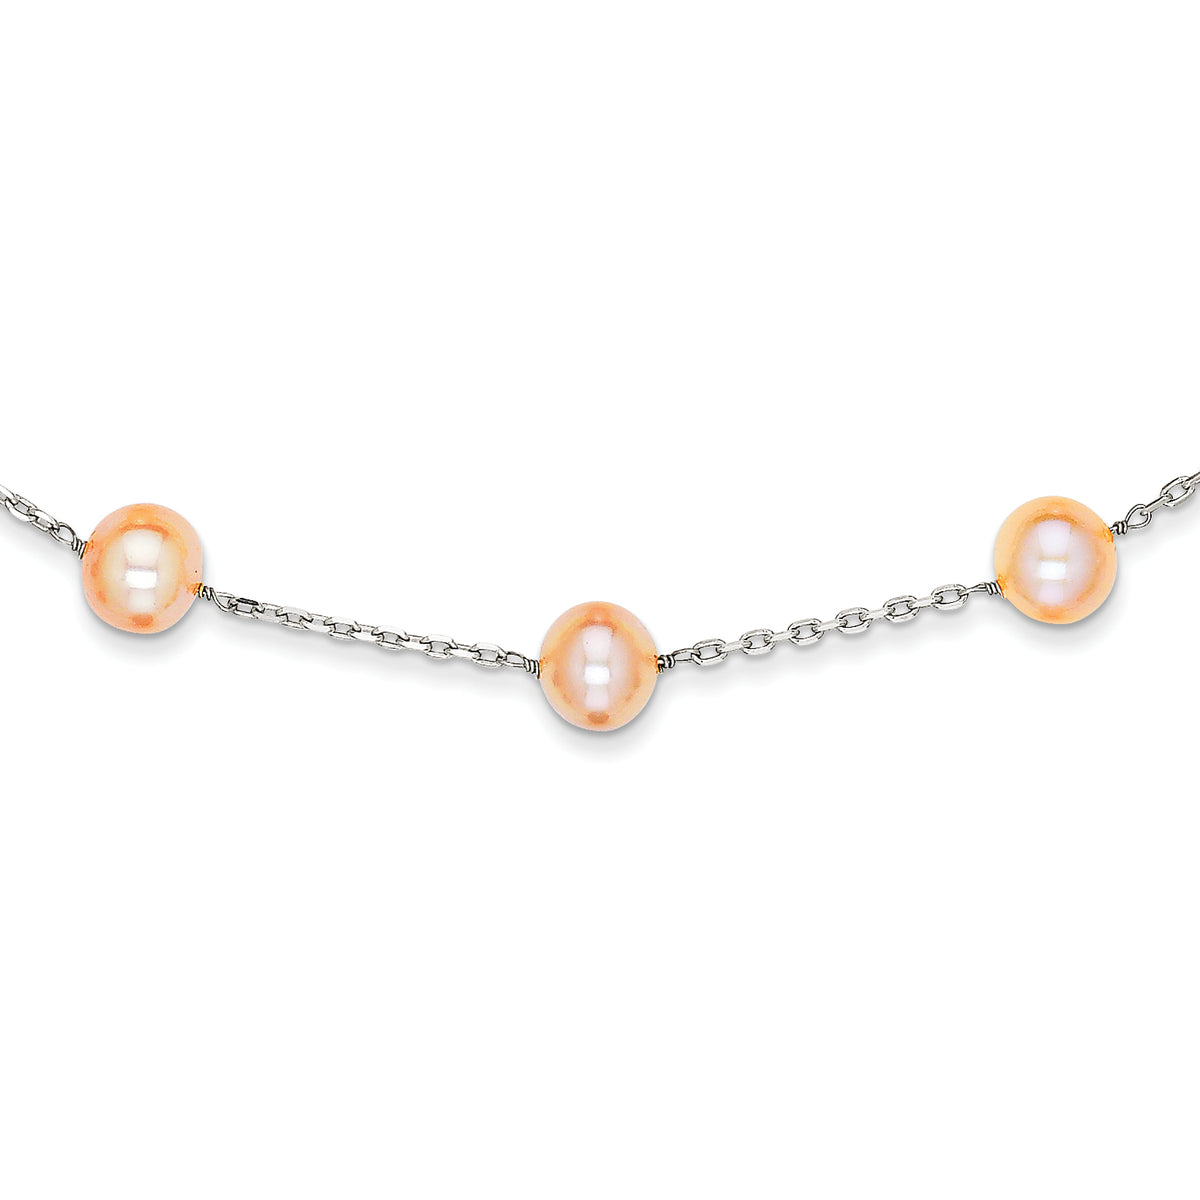 14K WG Cream Color FW Cultured Pearl Necklace